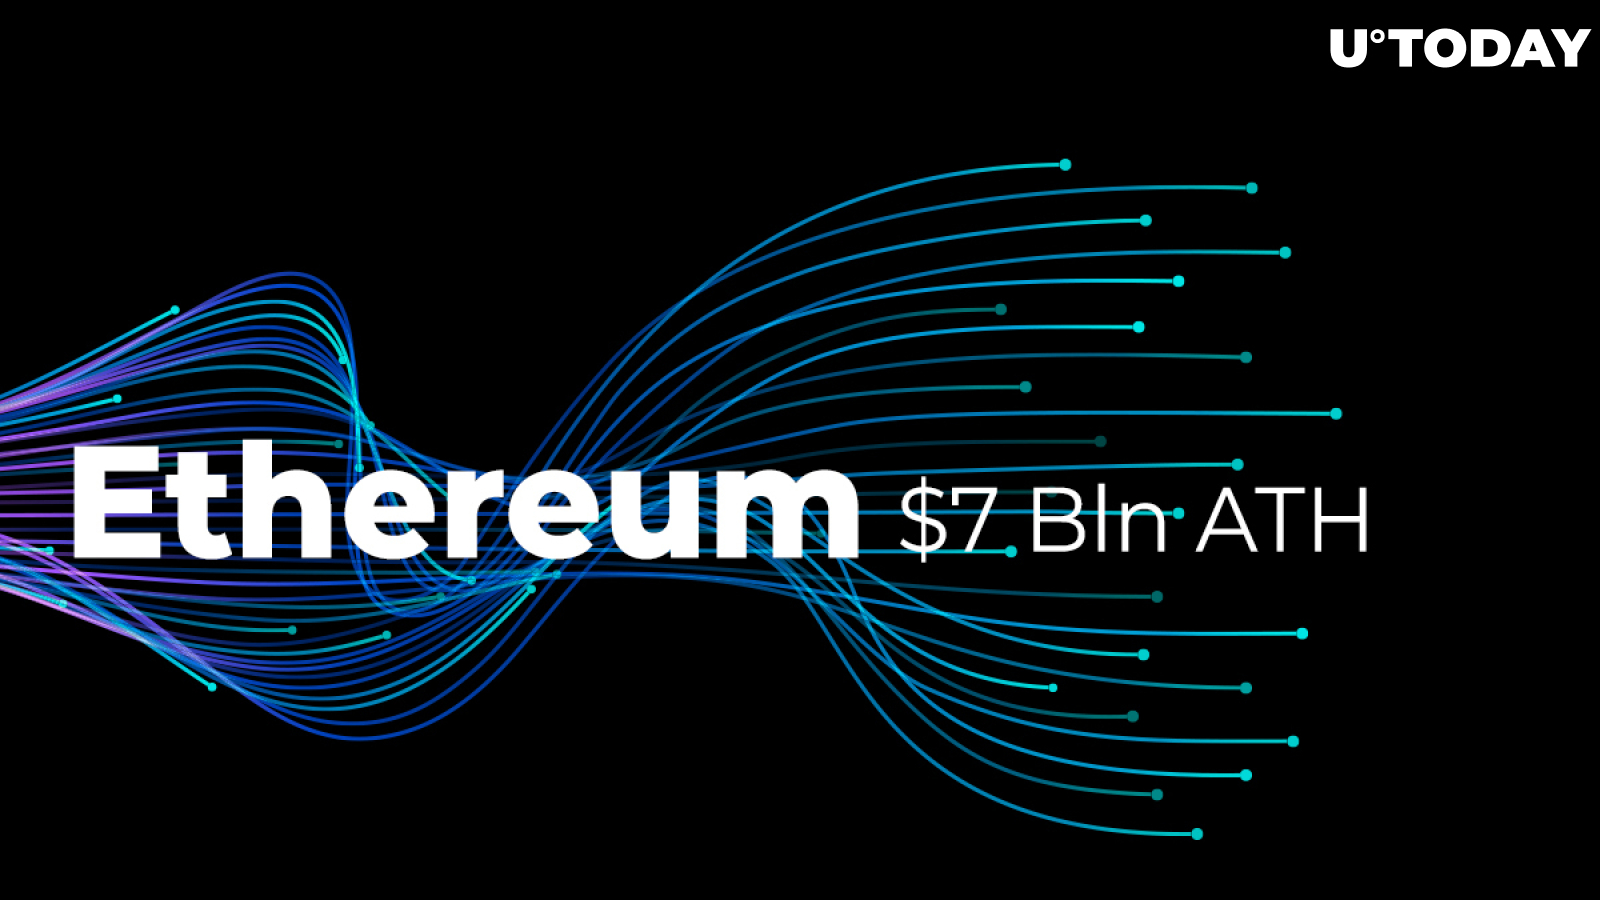 Actual Capital Flow Amount into Ethereum Just Hit $7 Bln ATH: Glassnode Data